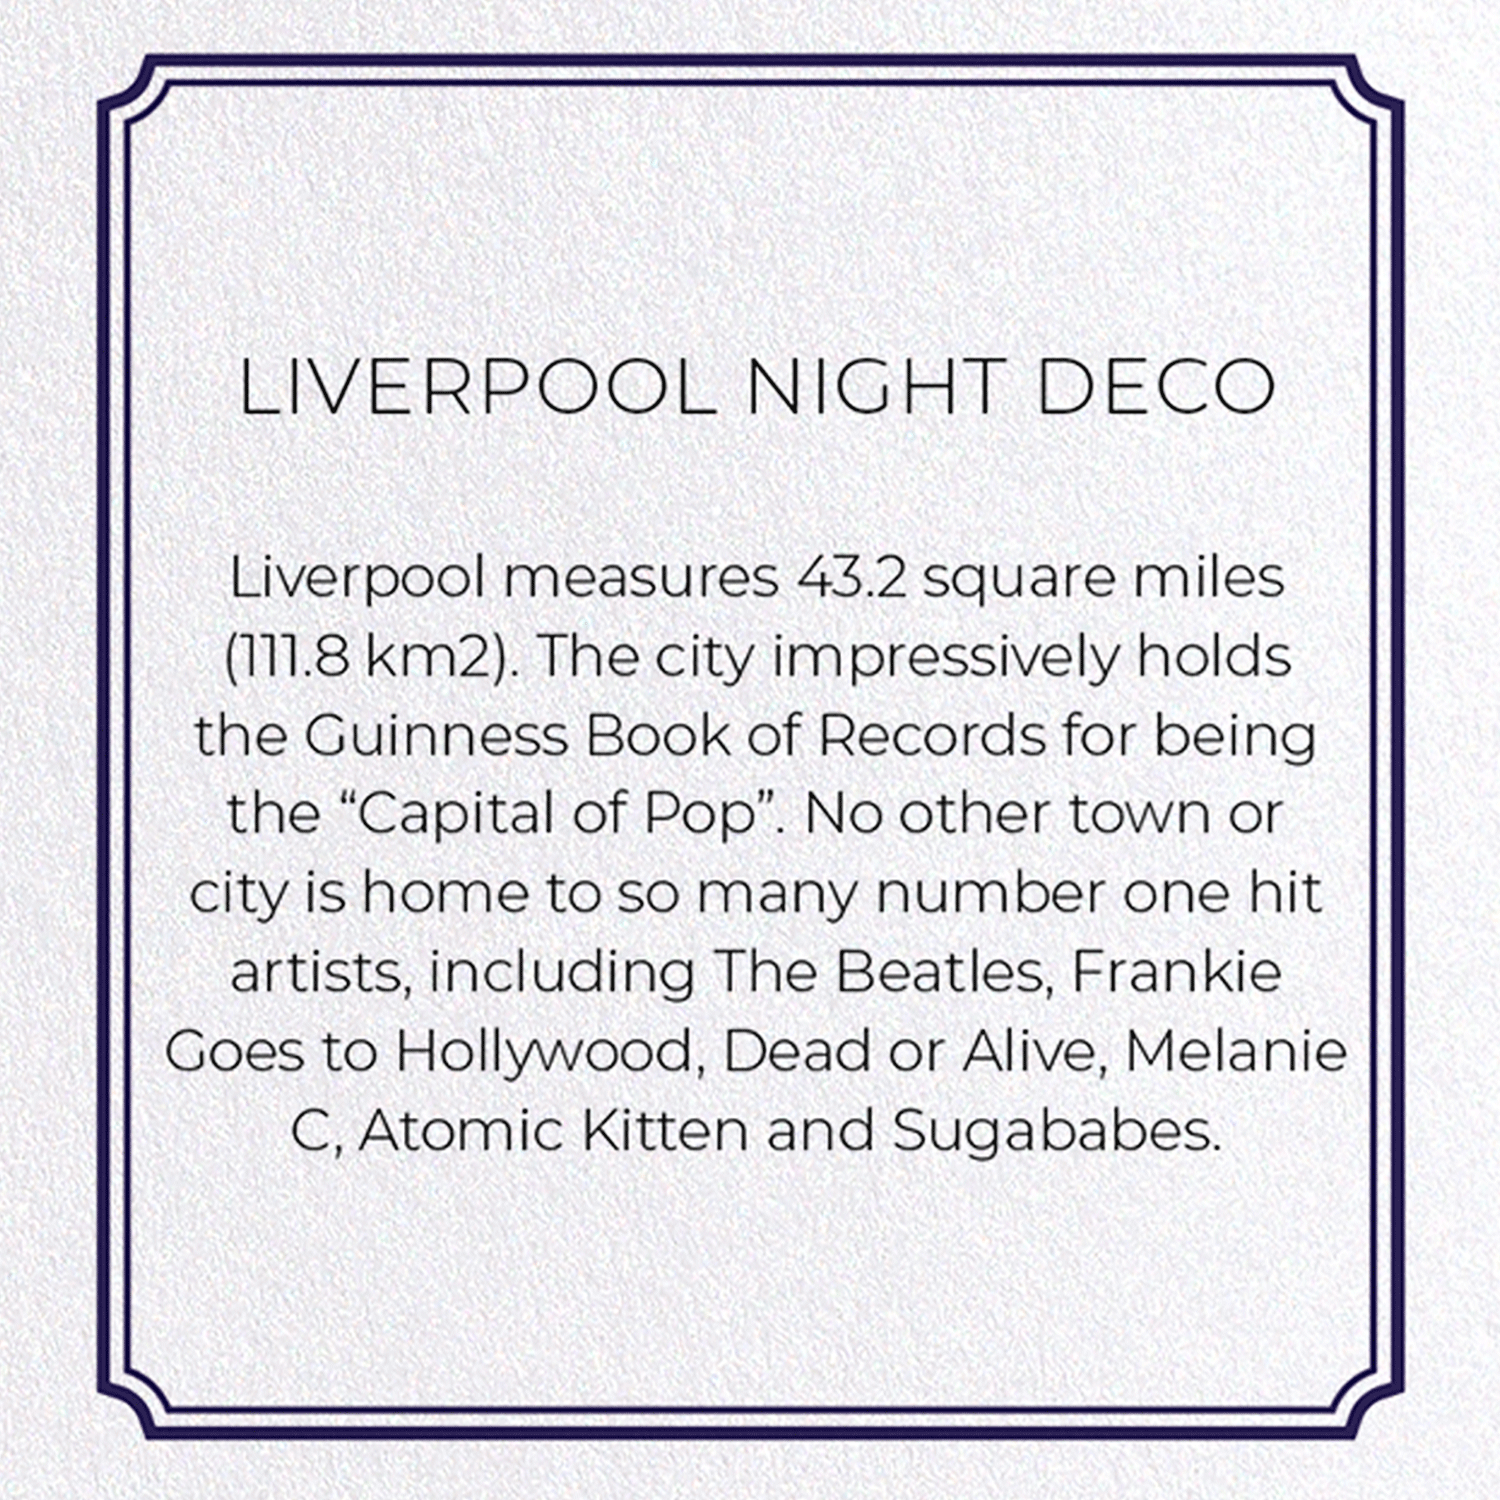 LIVERPOOL NIGHT DECO: Modern deco Greeting Card